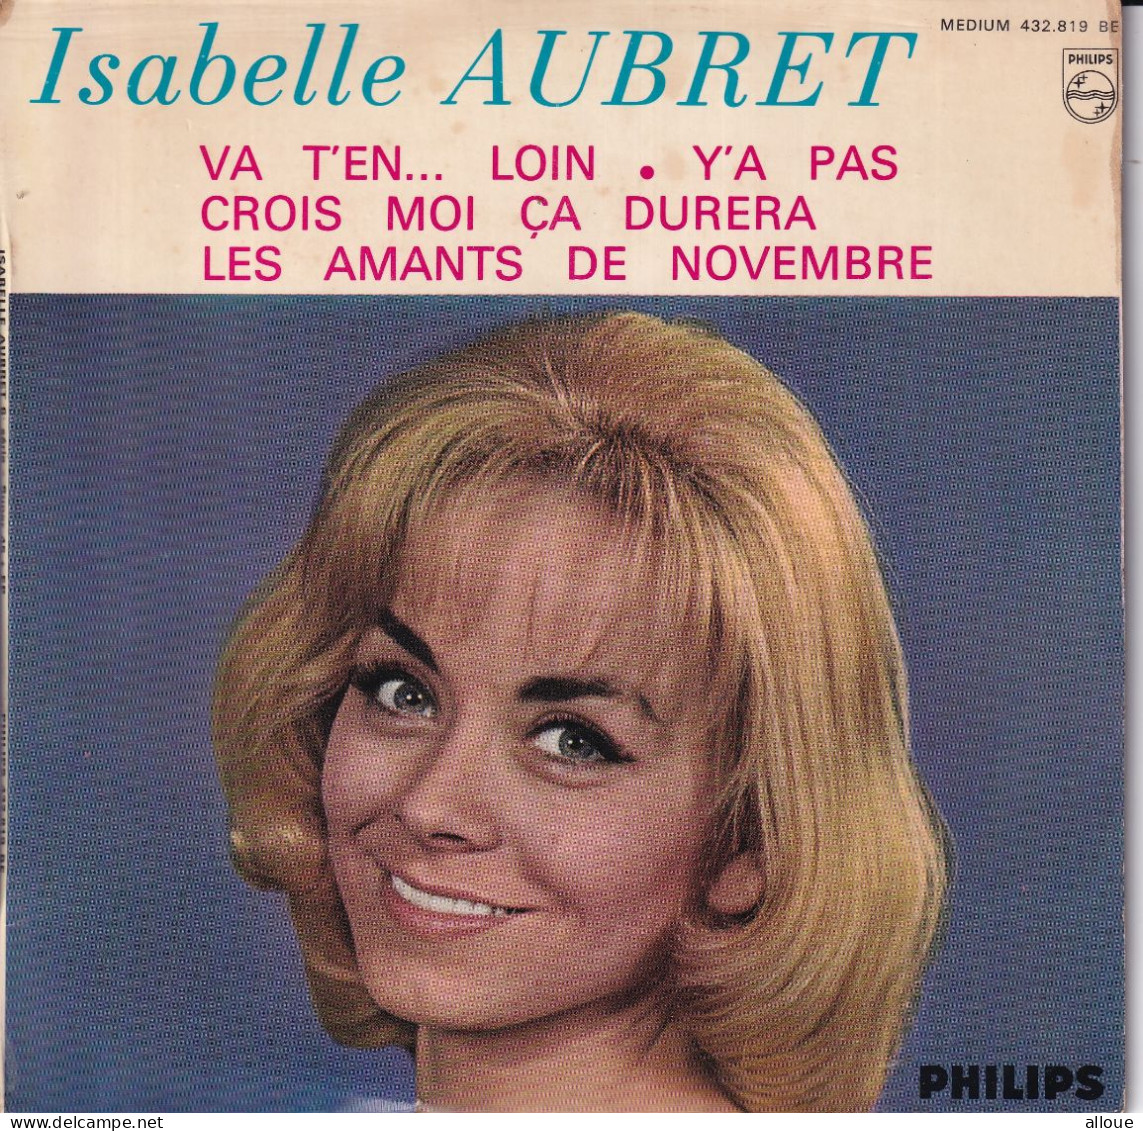 ISABELLE AUBRET - FR EP - VA T'EN... LOIN + 3 - Other - French Music